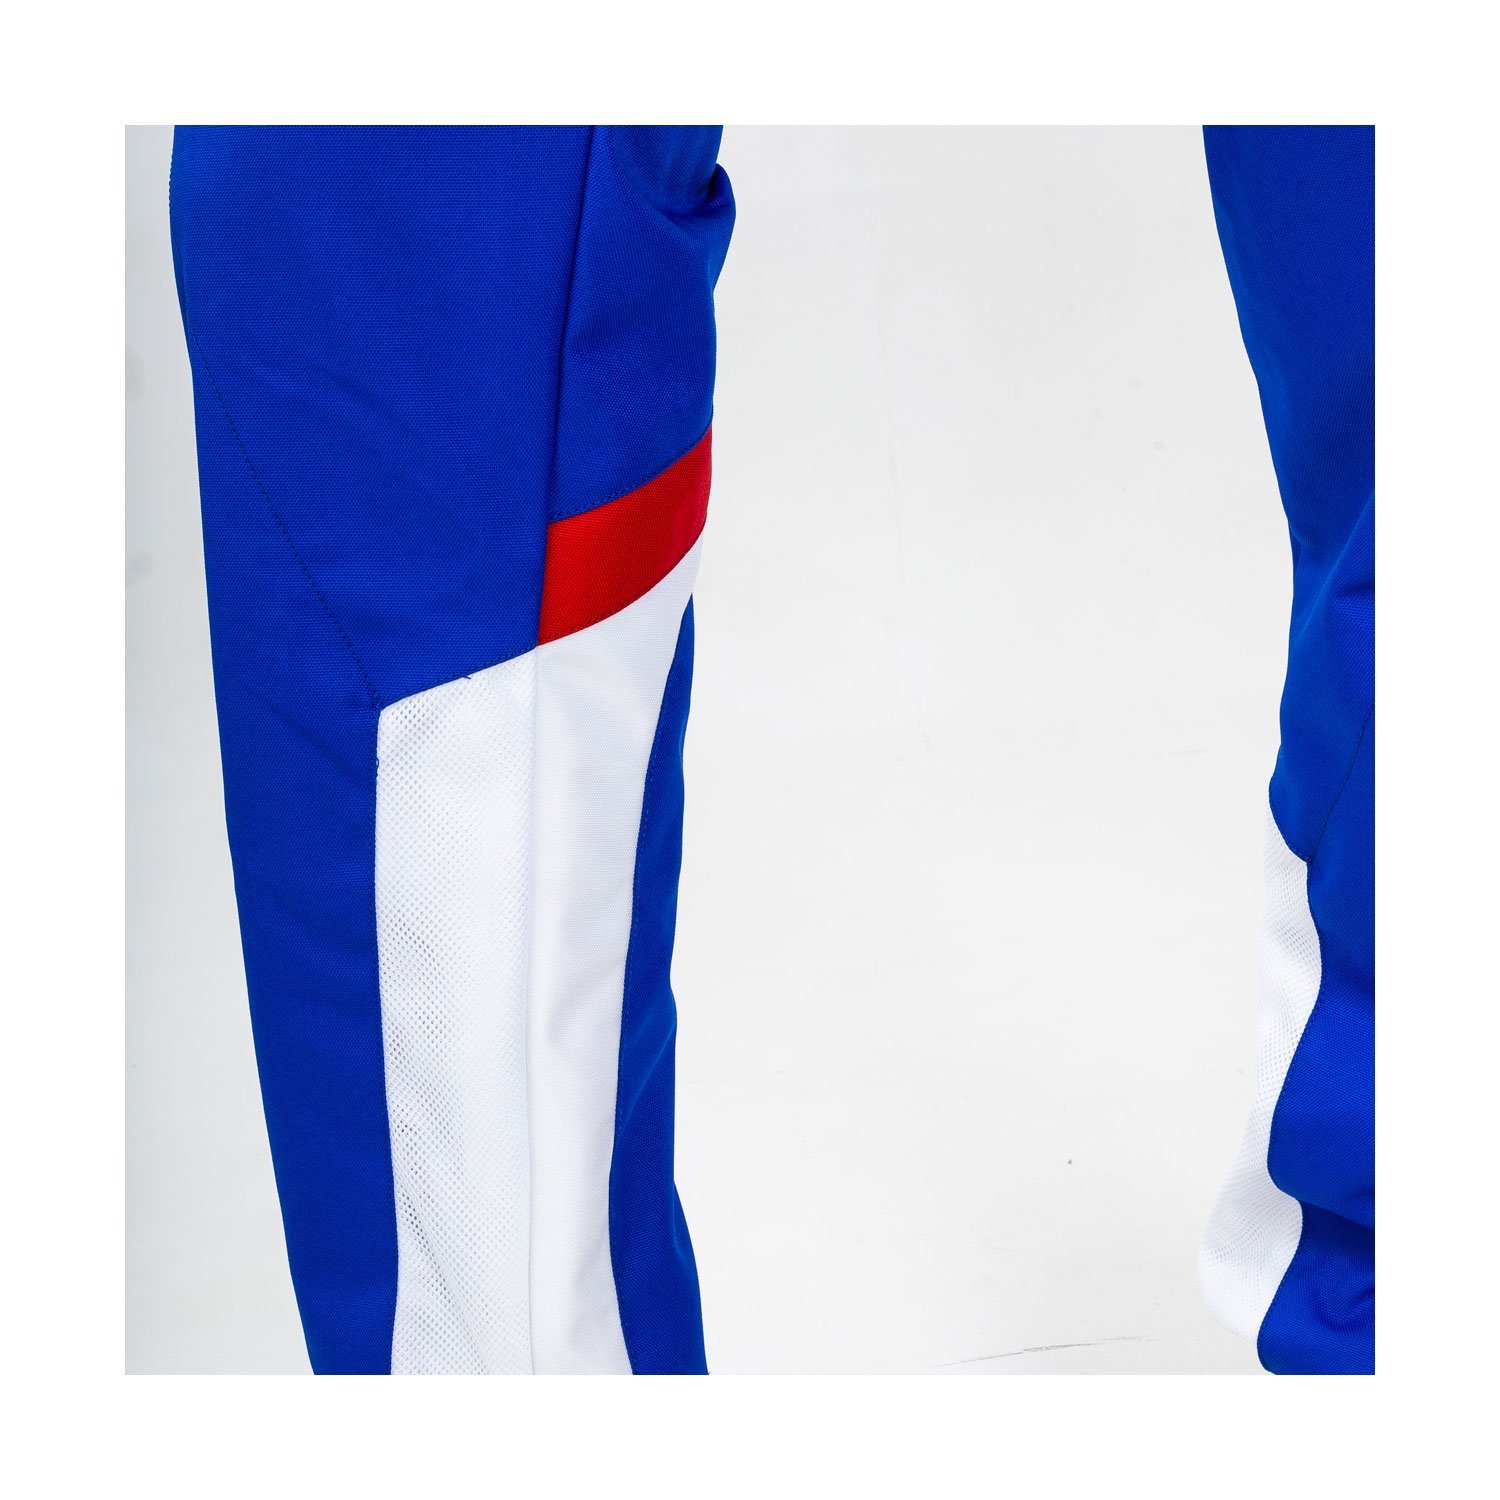 Sparco combinaison Thunder Bleu Rouge - Racing Fashion